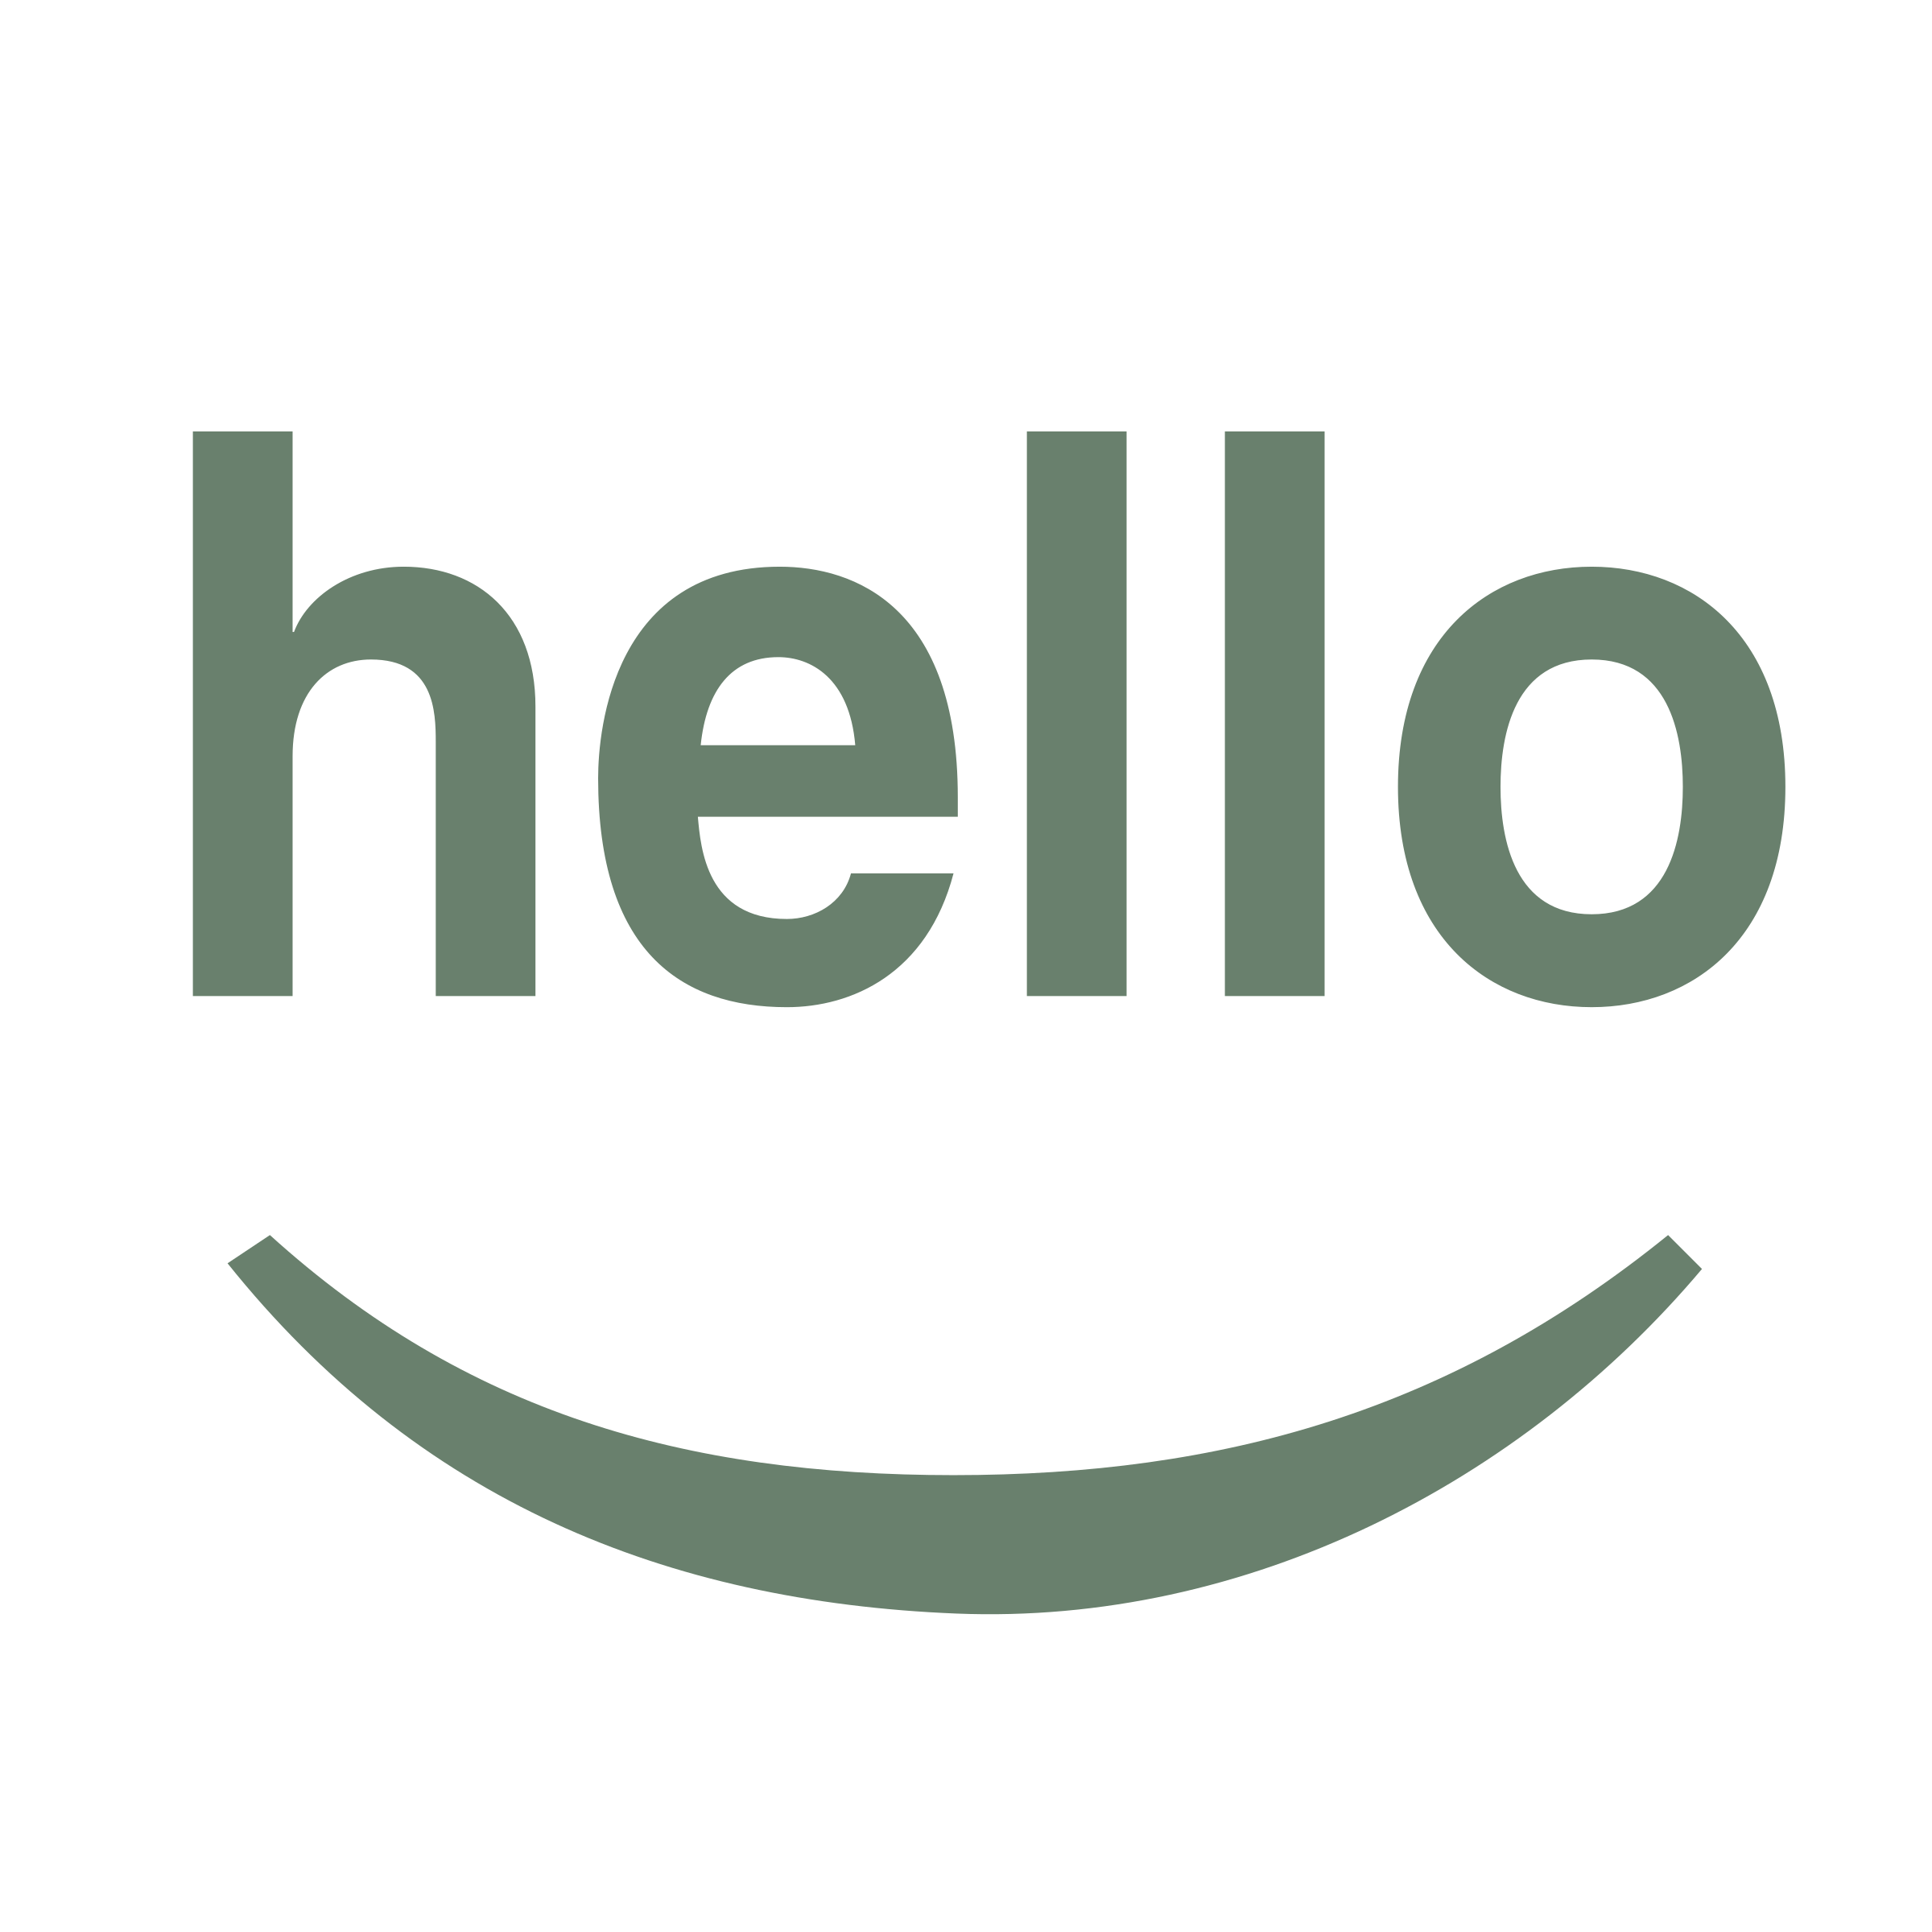 Hello Logo - Hello Design Logo PNG Transparent & SVG Vector - Freebie Supply